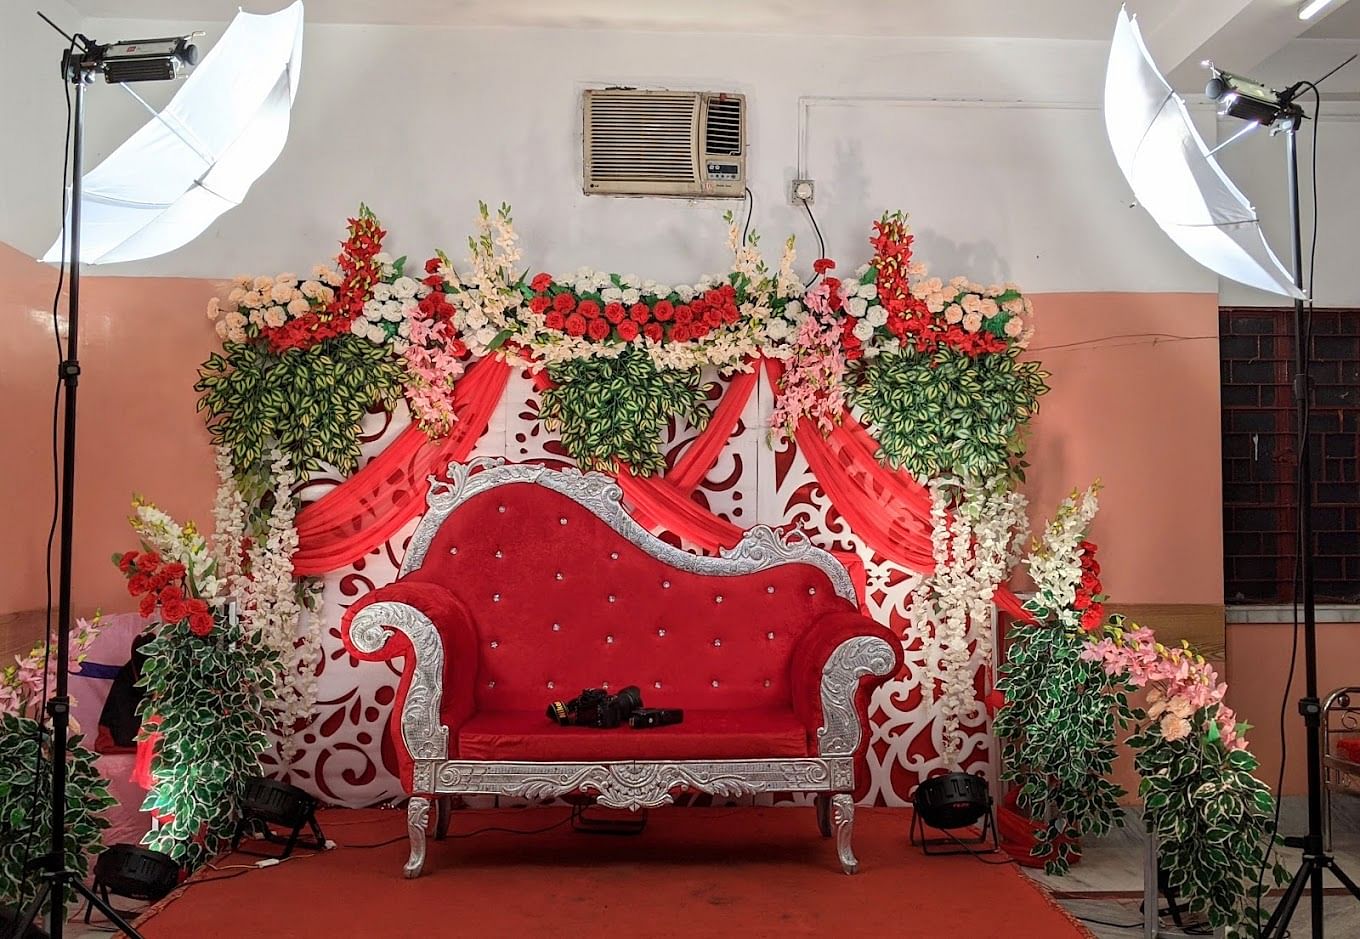 Khanika Marriage Hall in Muradpur, Kolkata